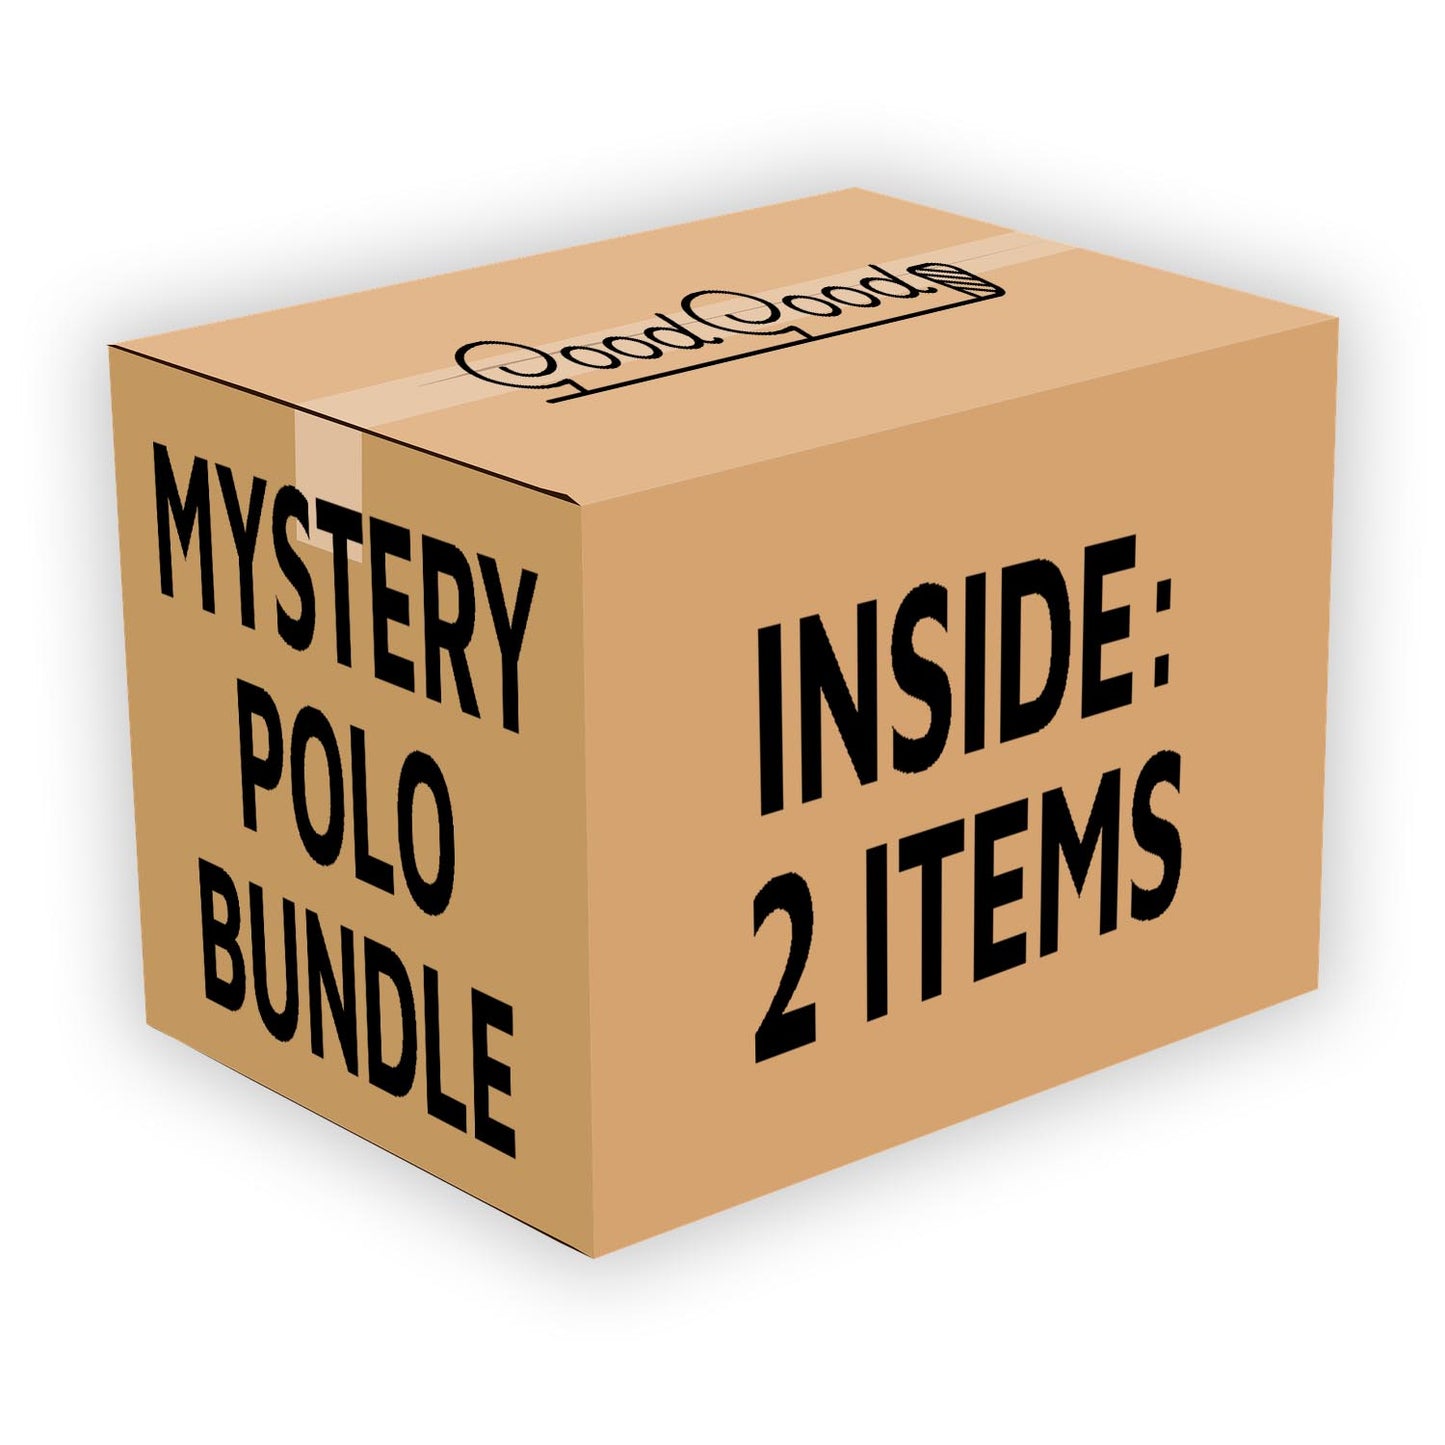 Mystery Polo Bundle